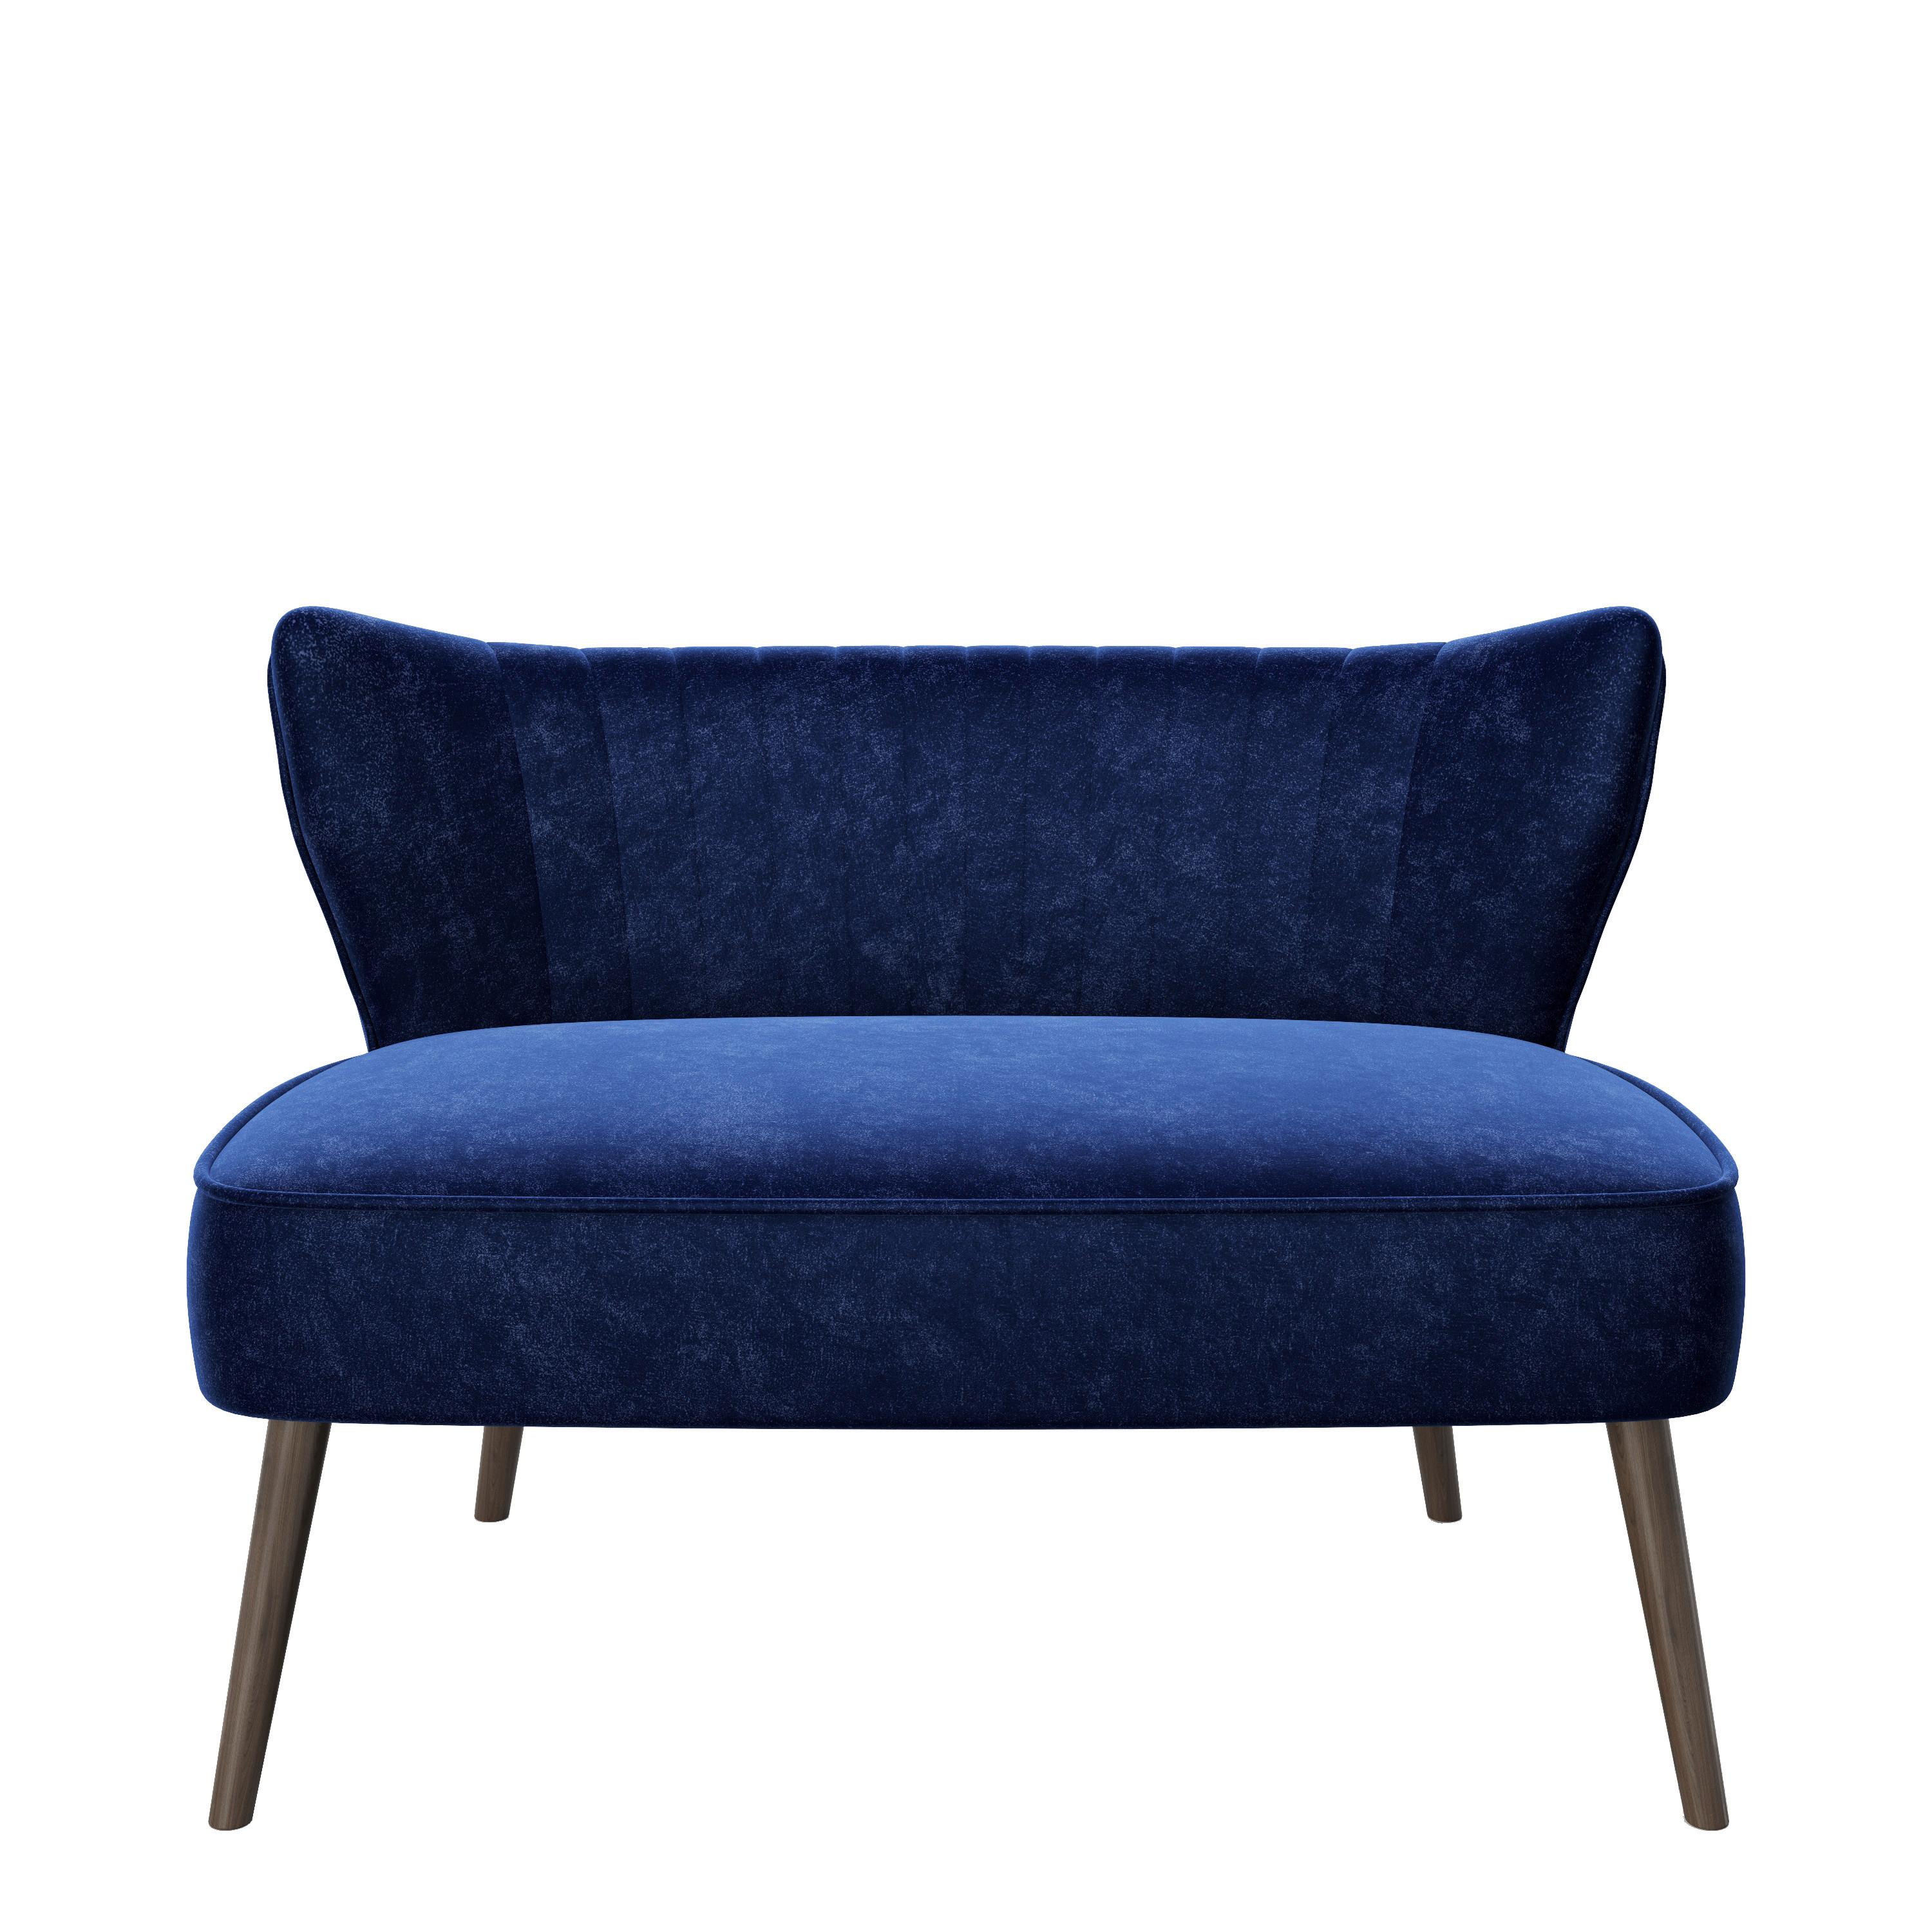 2-Sitzer-Sofa Kelly Blau Vintage-Style - Blau/Walnussfarben, KONVENTIONELL, Kunststoff/Textil (112/76/73cm) - Playboy